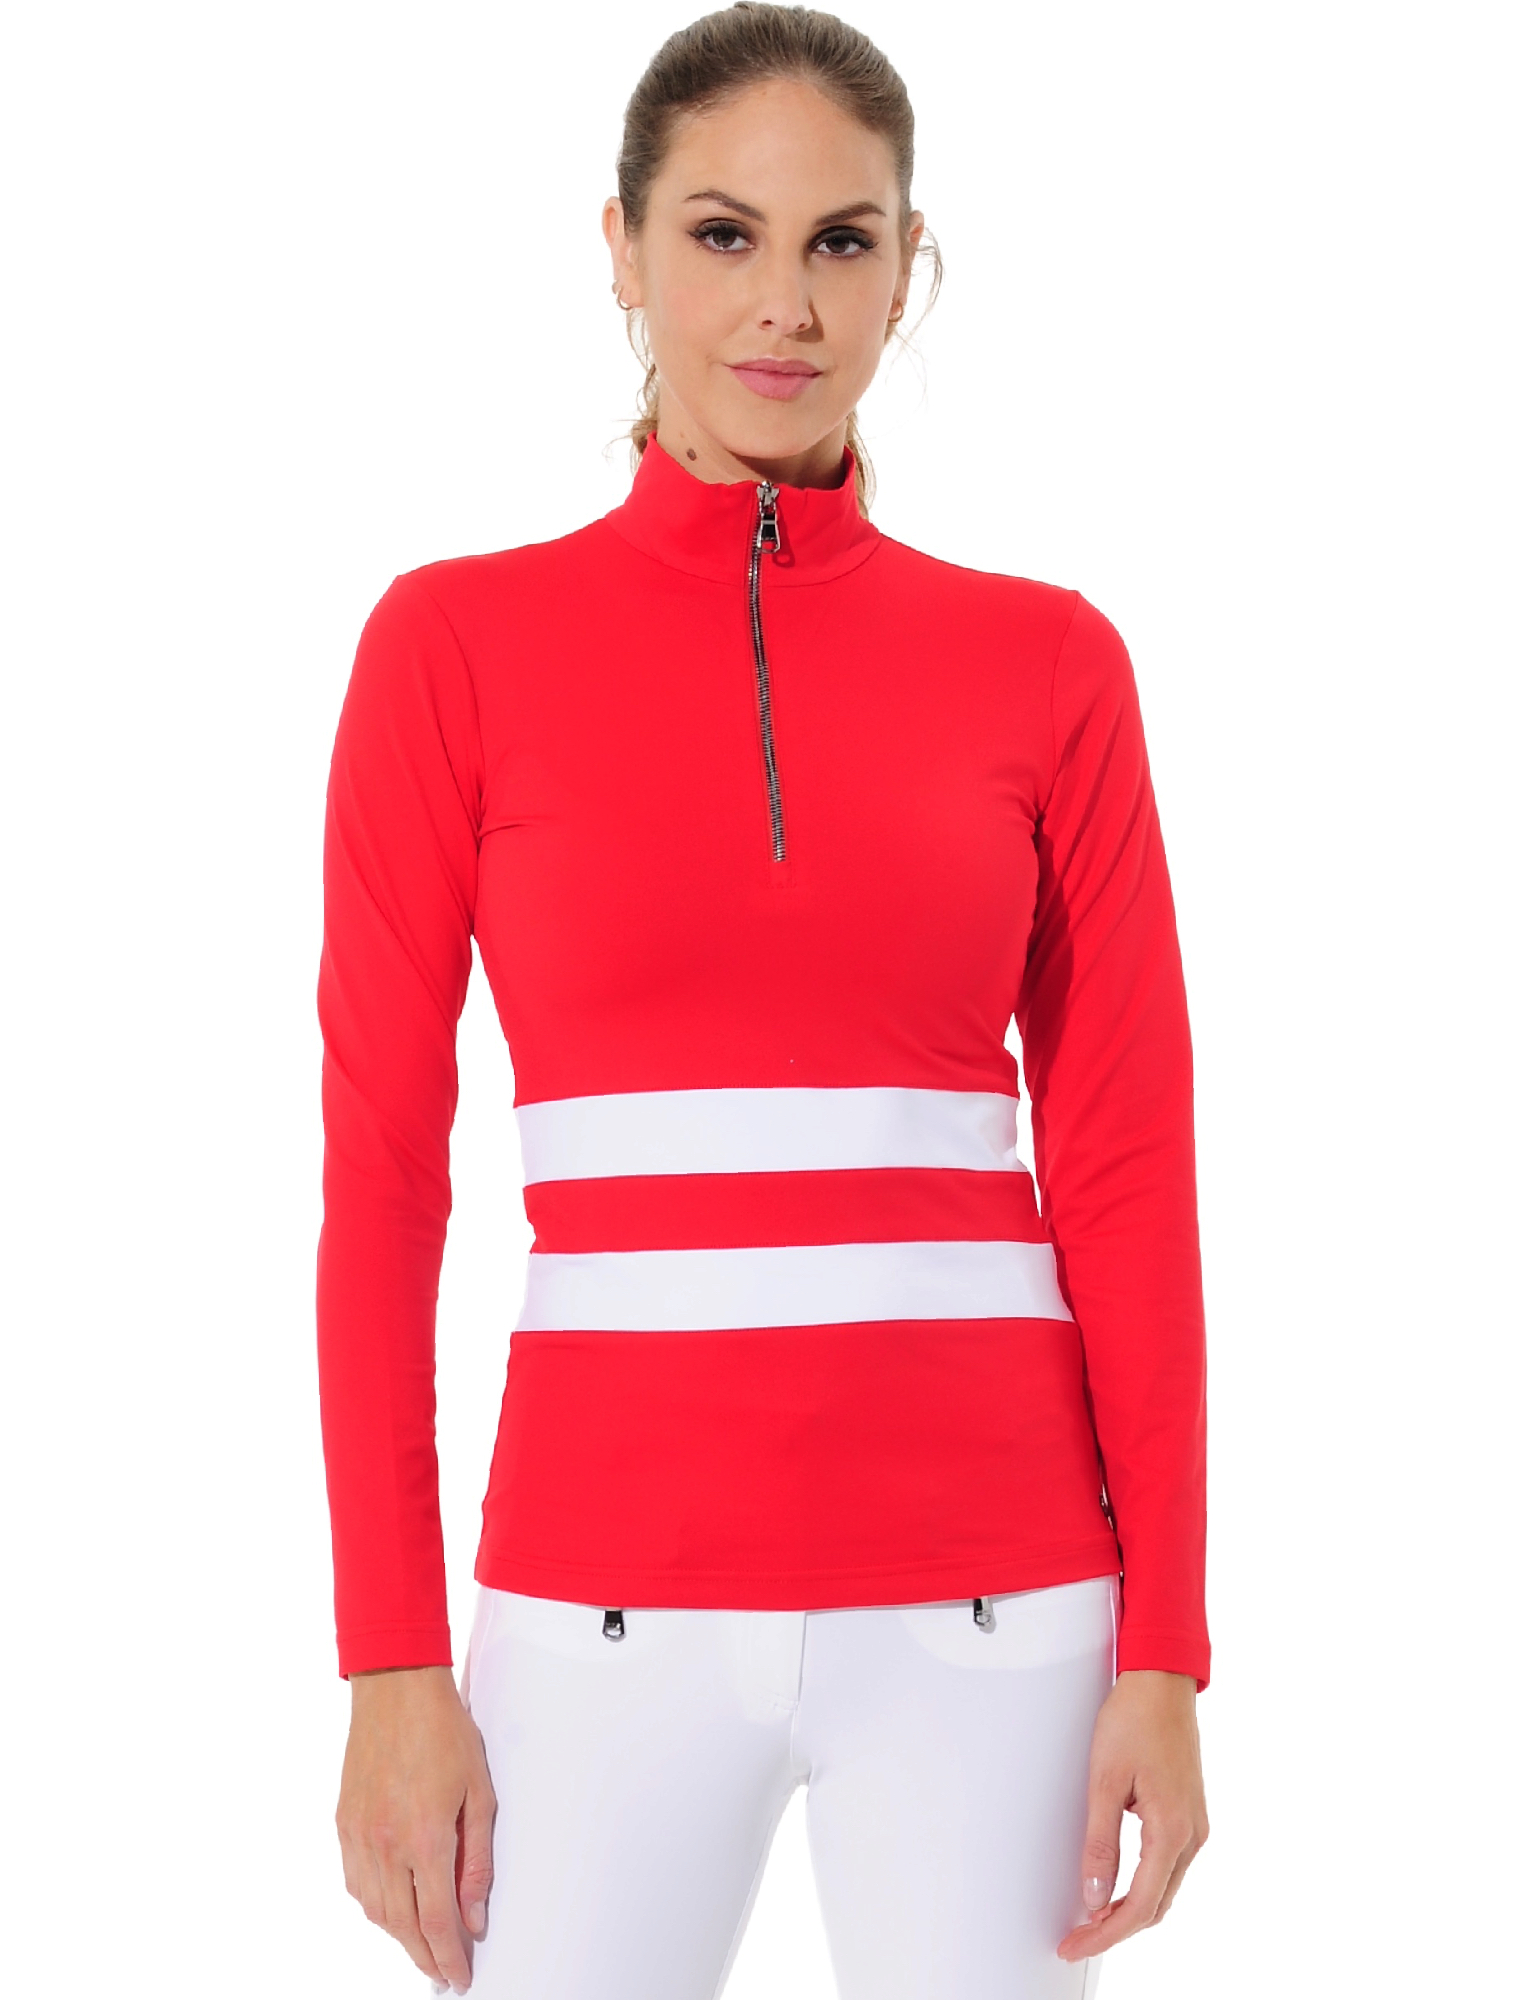 Jersey Zip Golf Poloshirt red/white